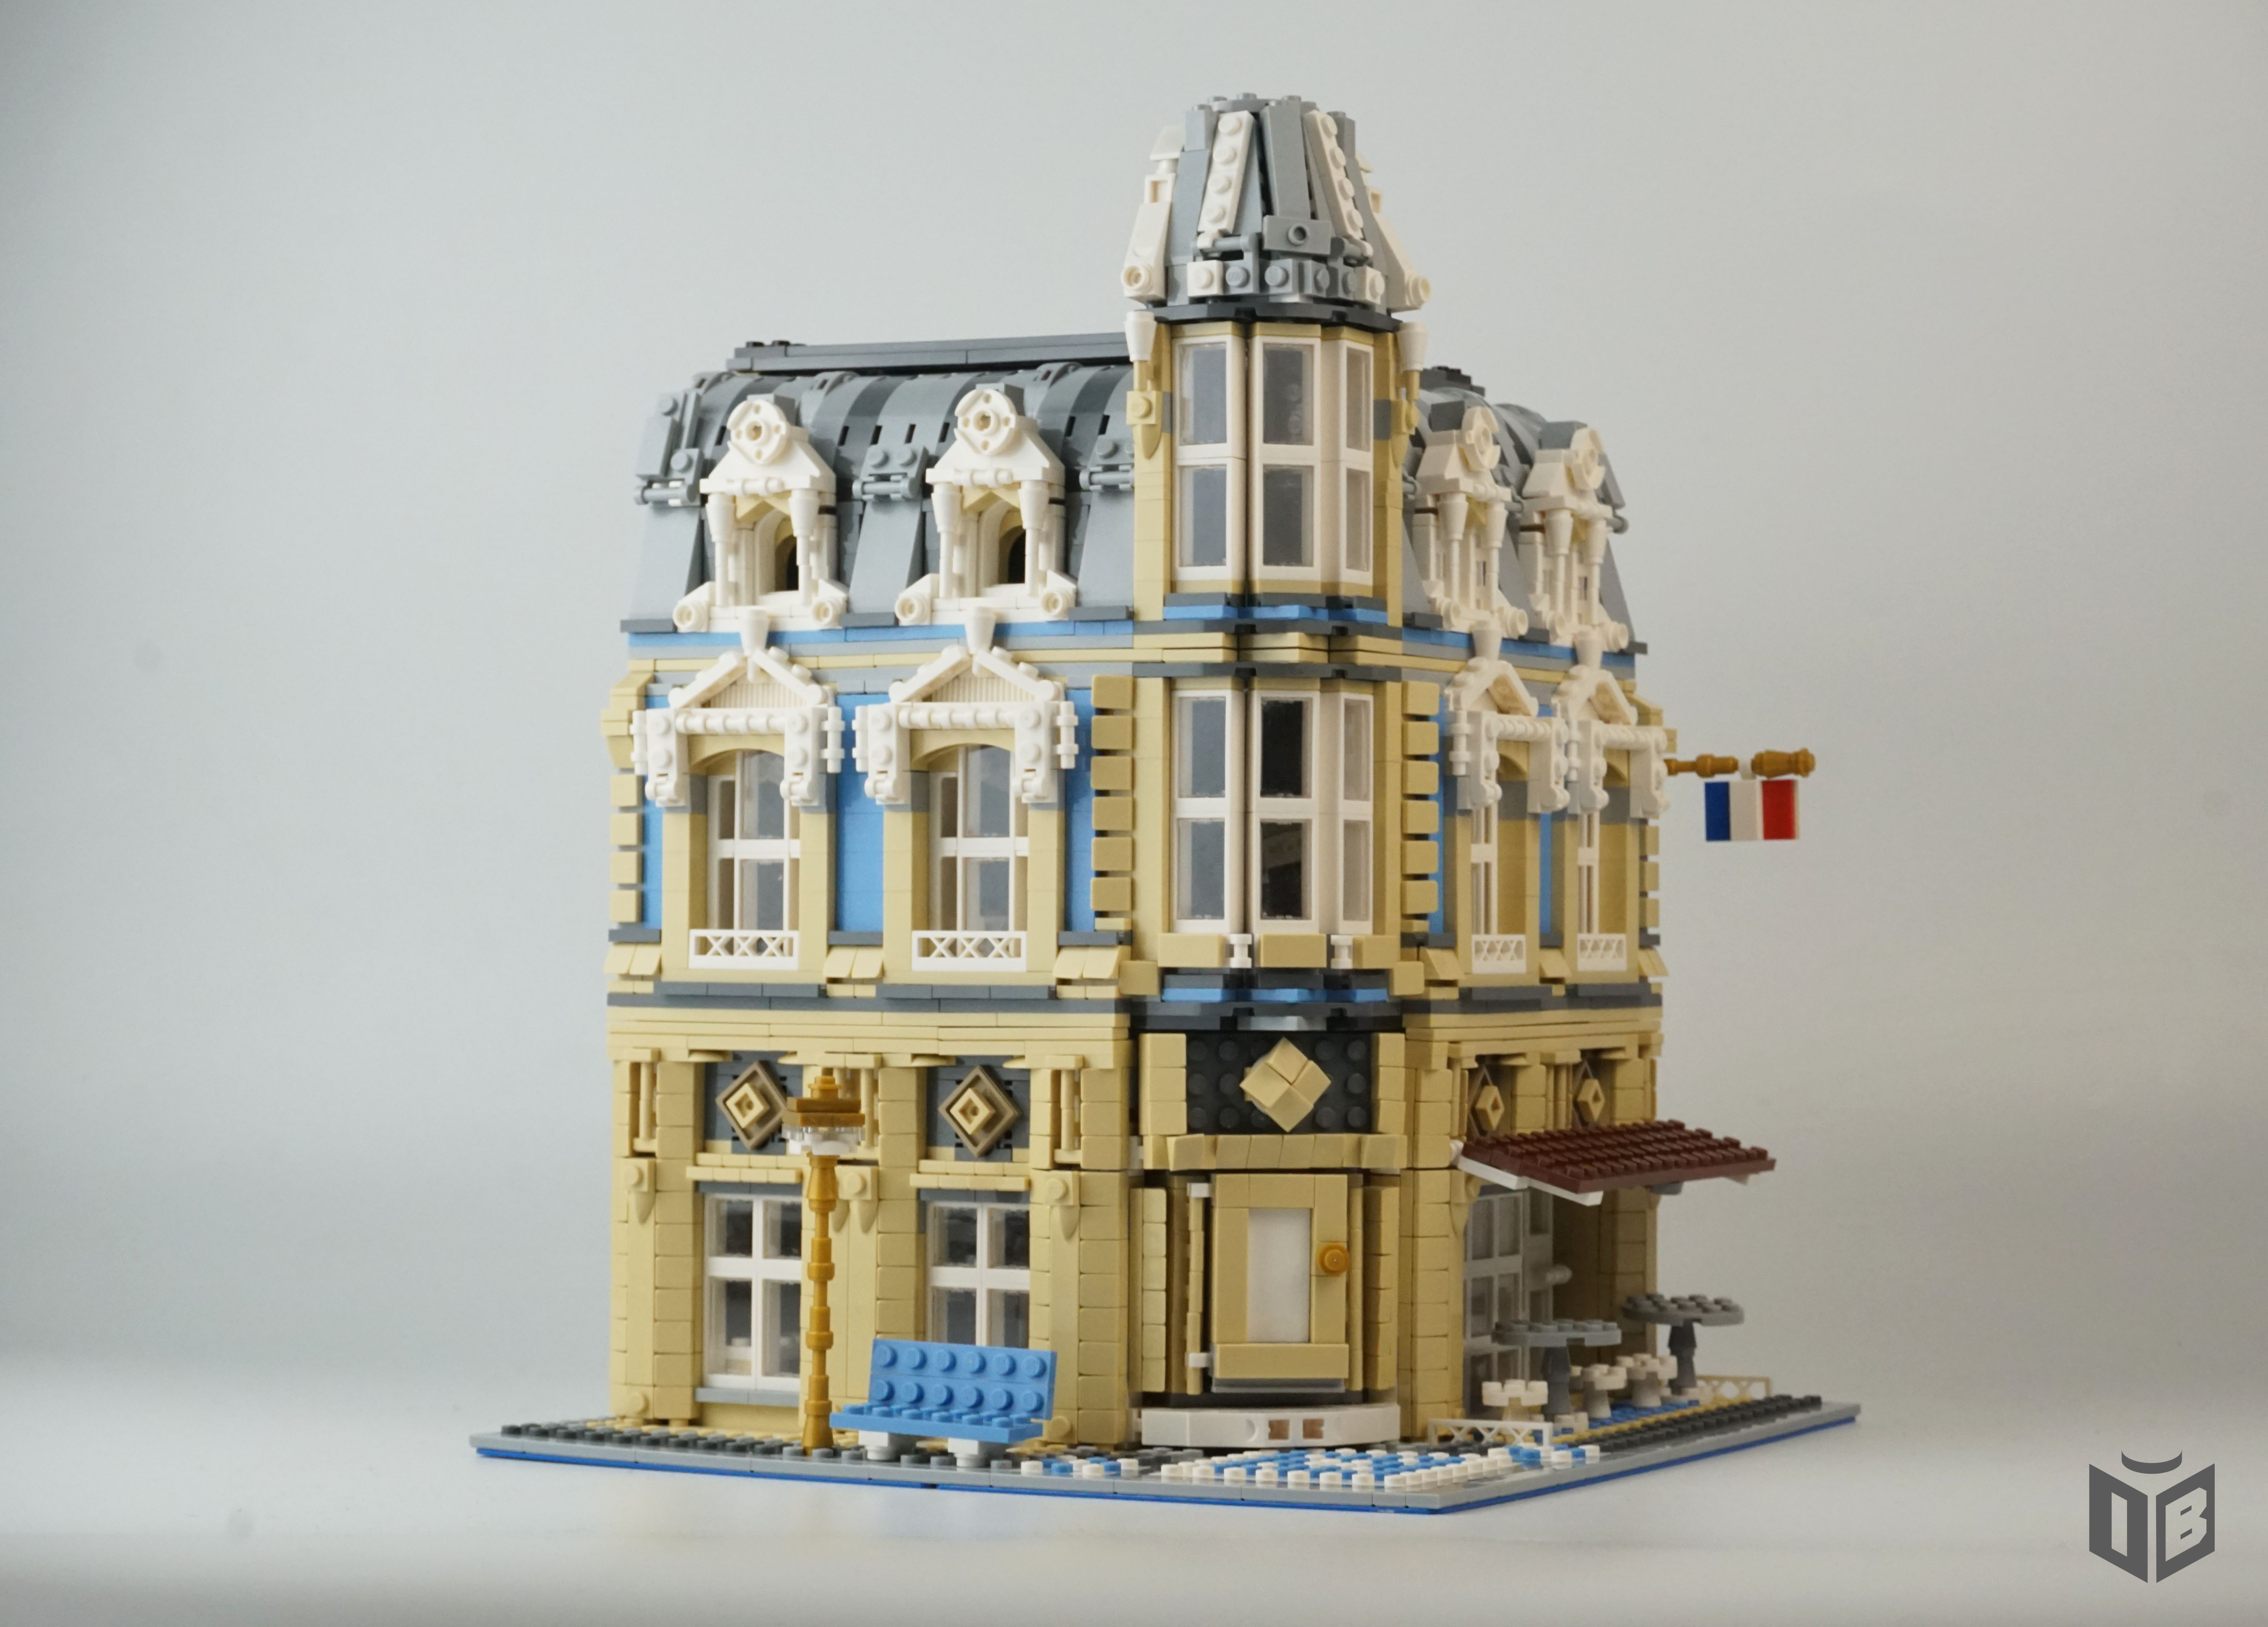 LEGO MOC 10214 Tower Bridge Alternative build Rebrickable - Build with